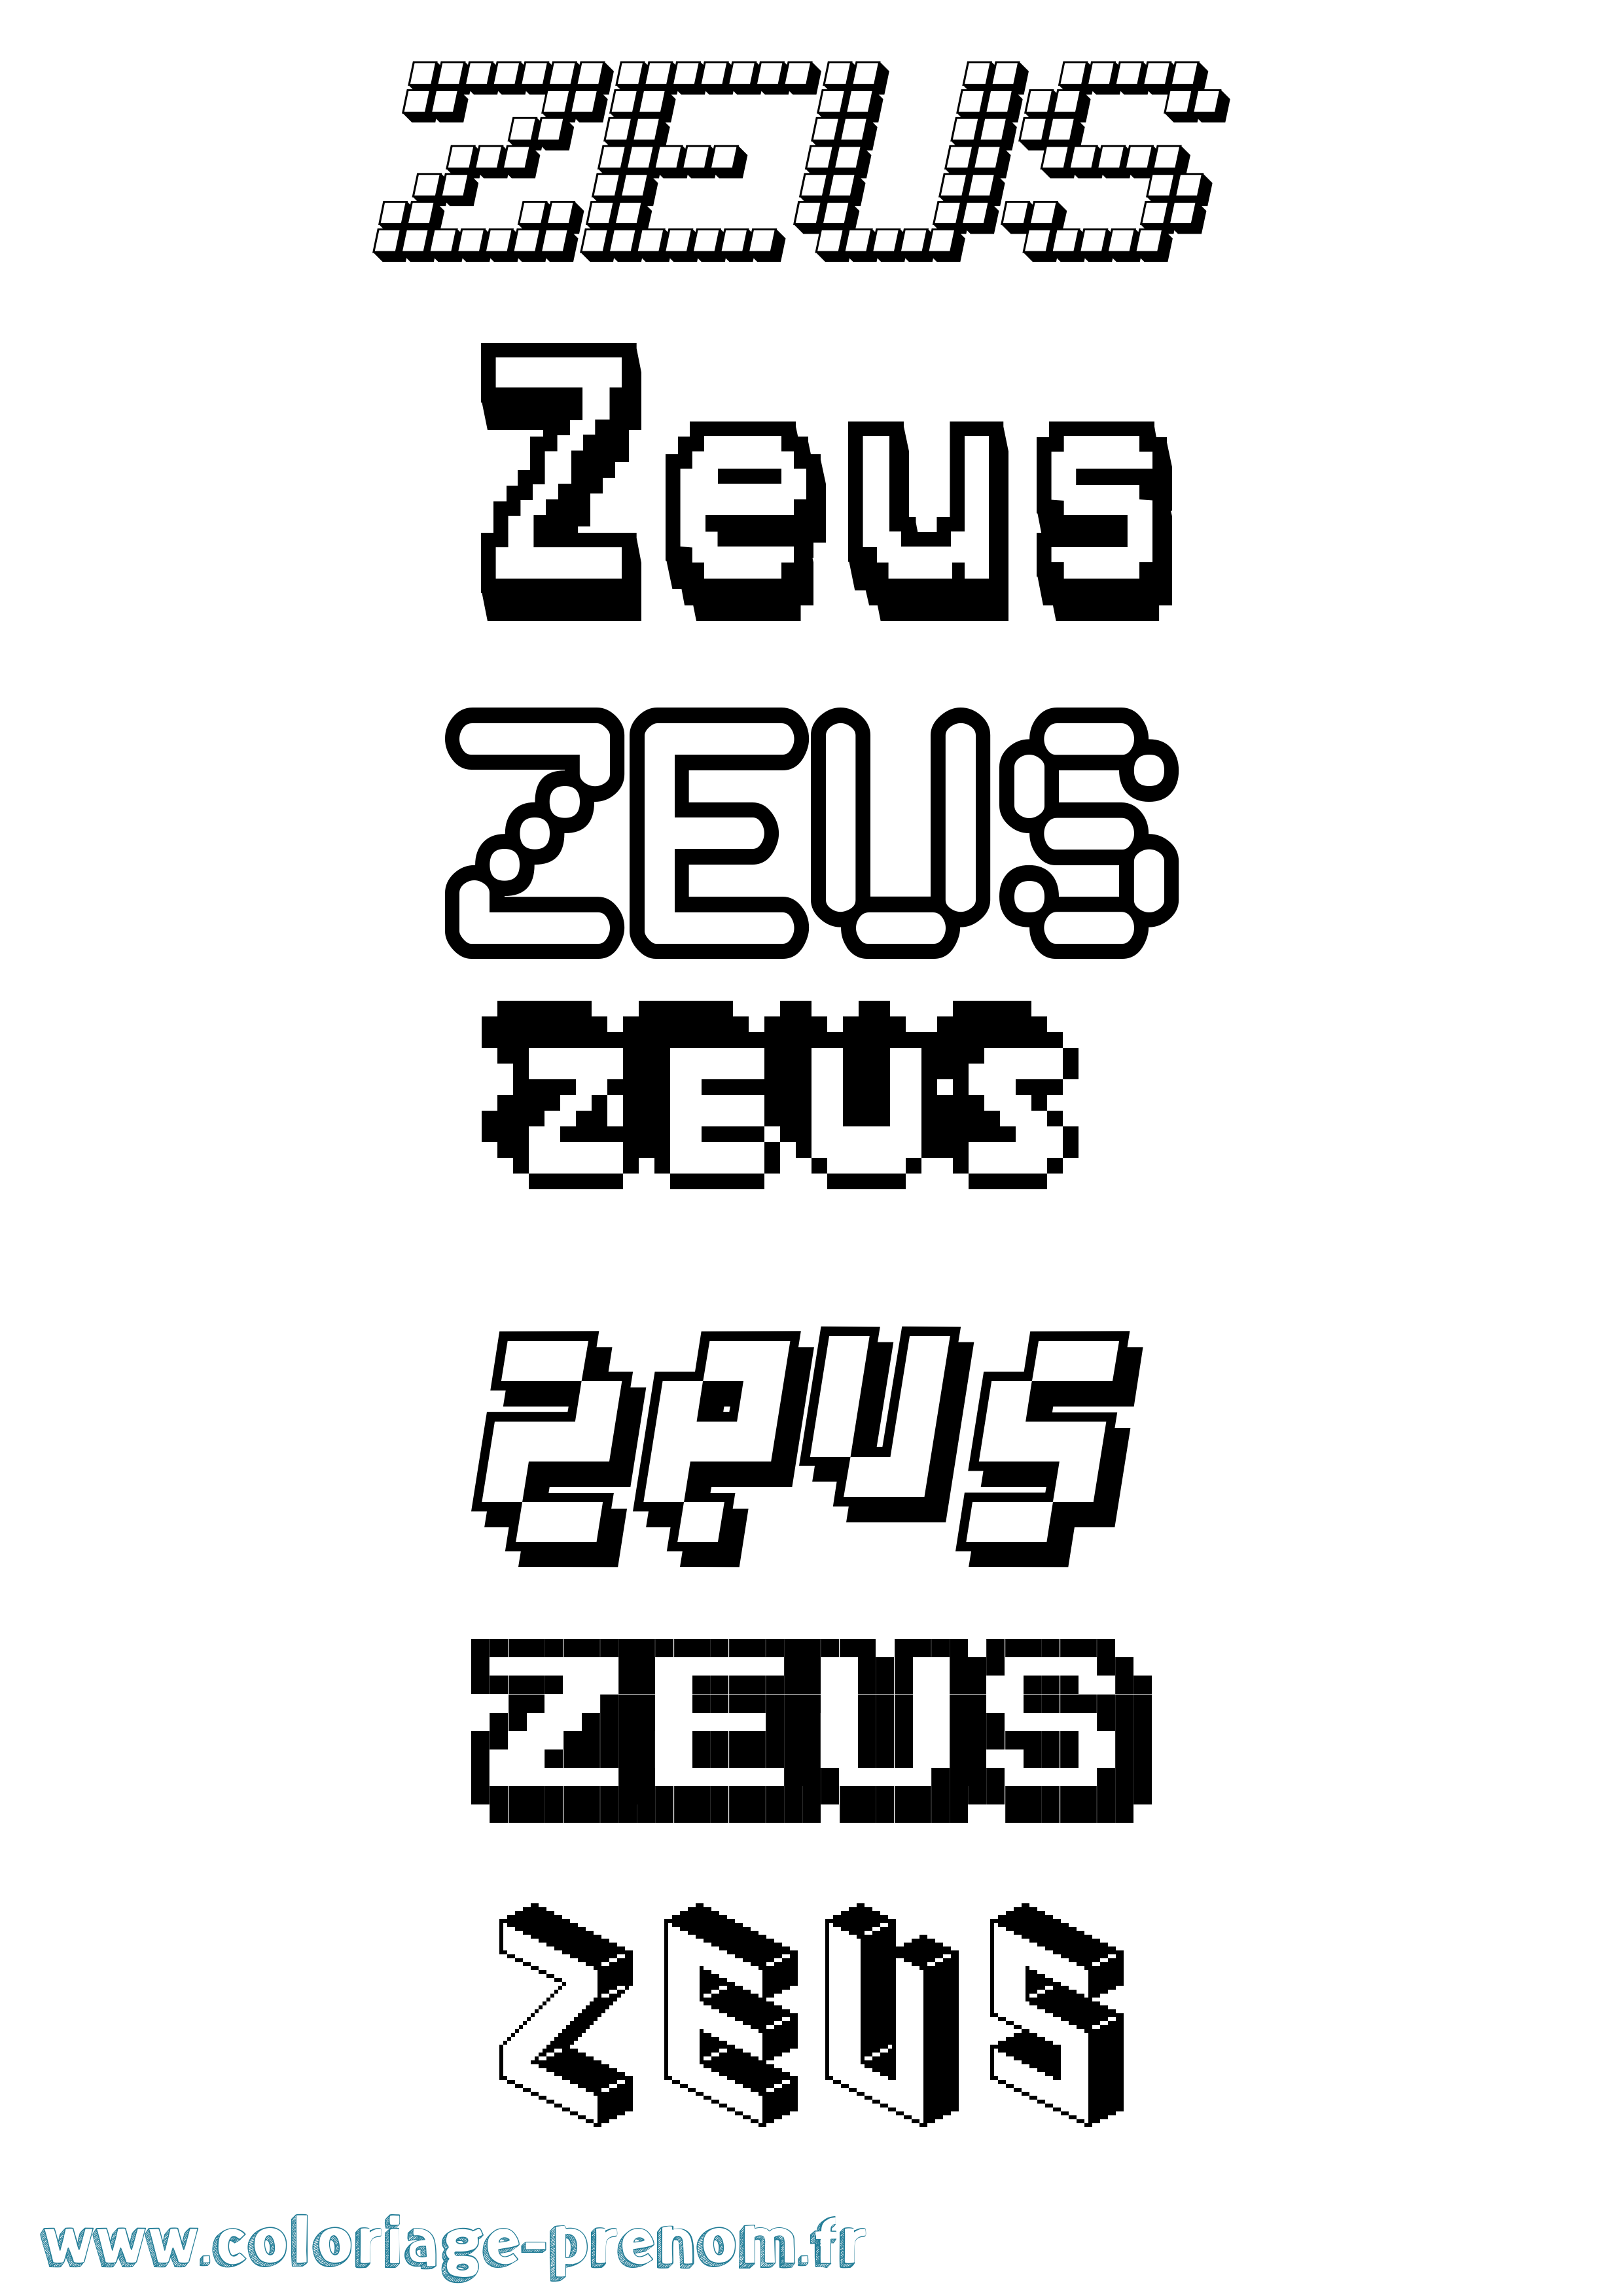 Coloriage prénom Zeus Pixel